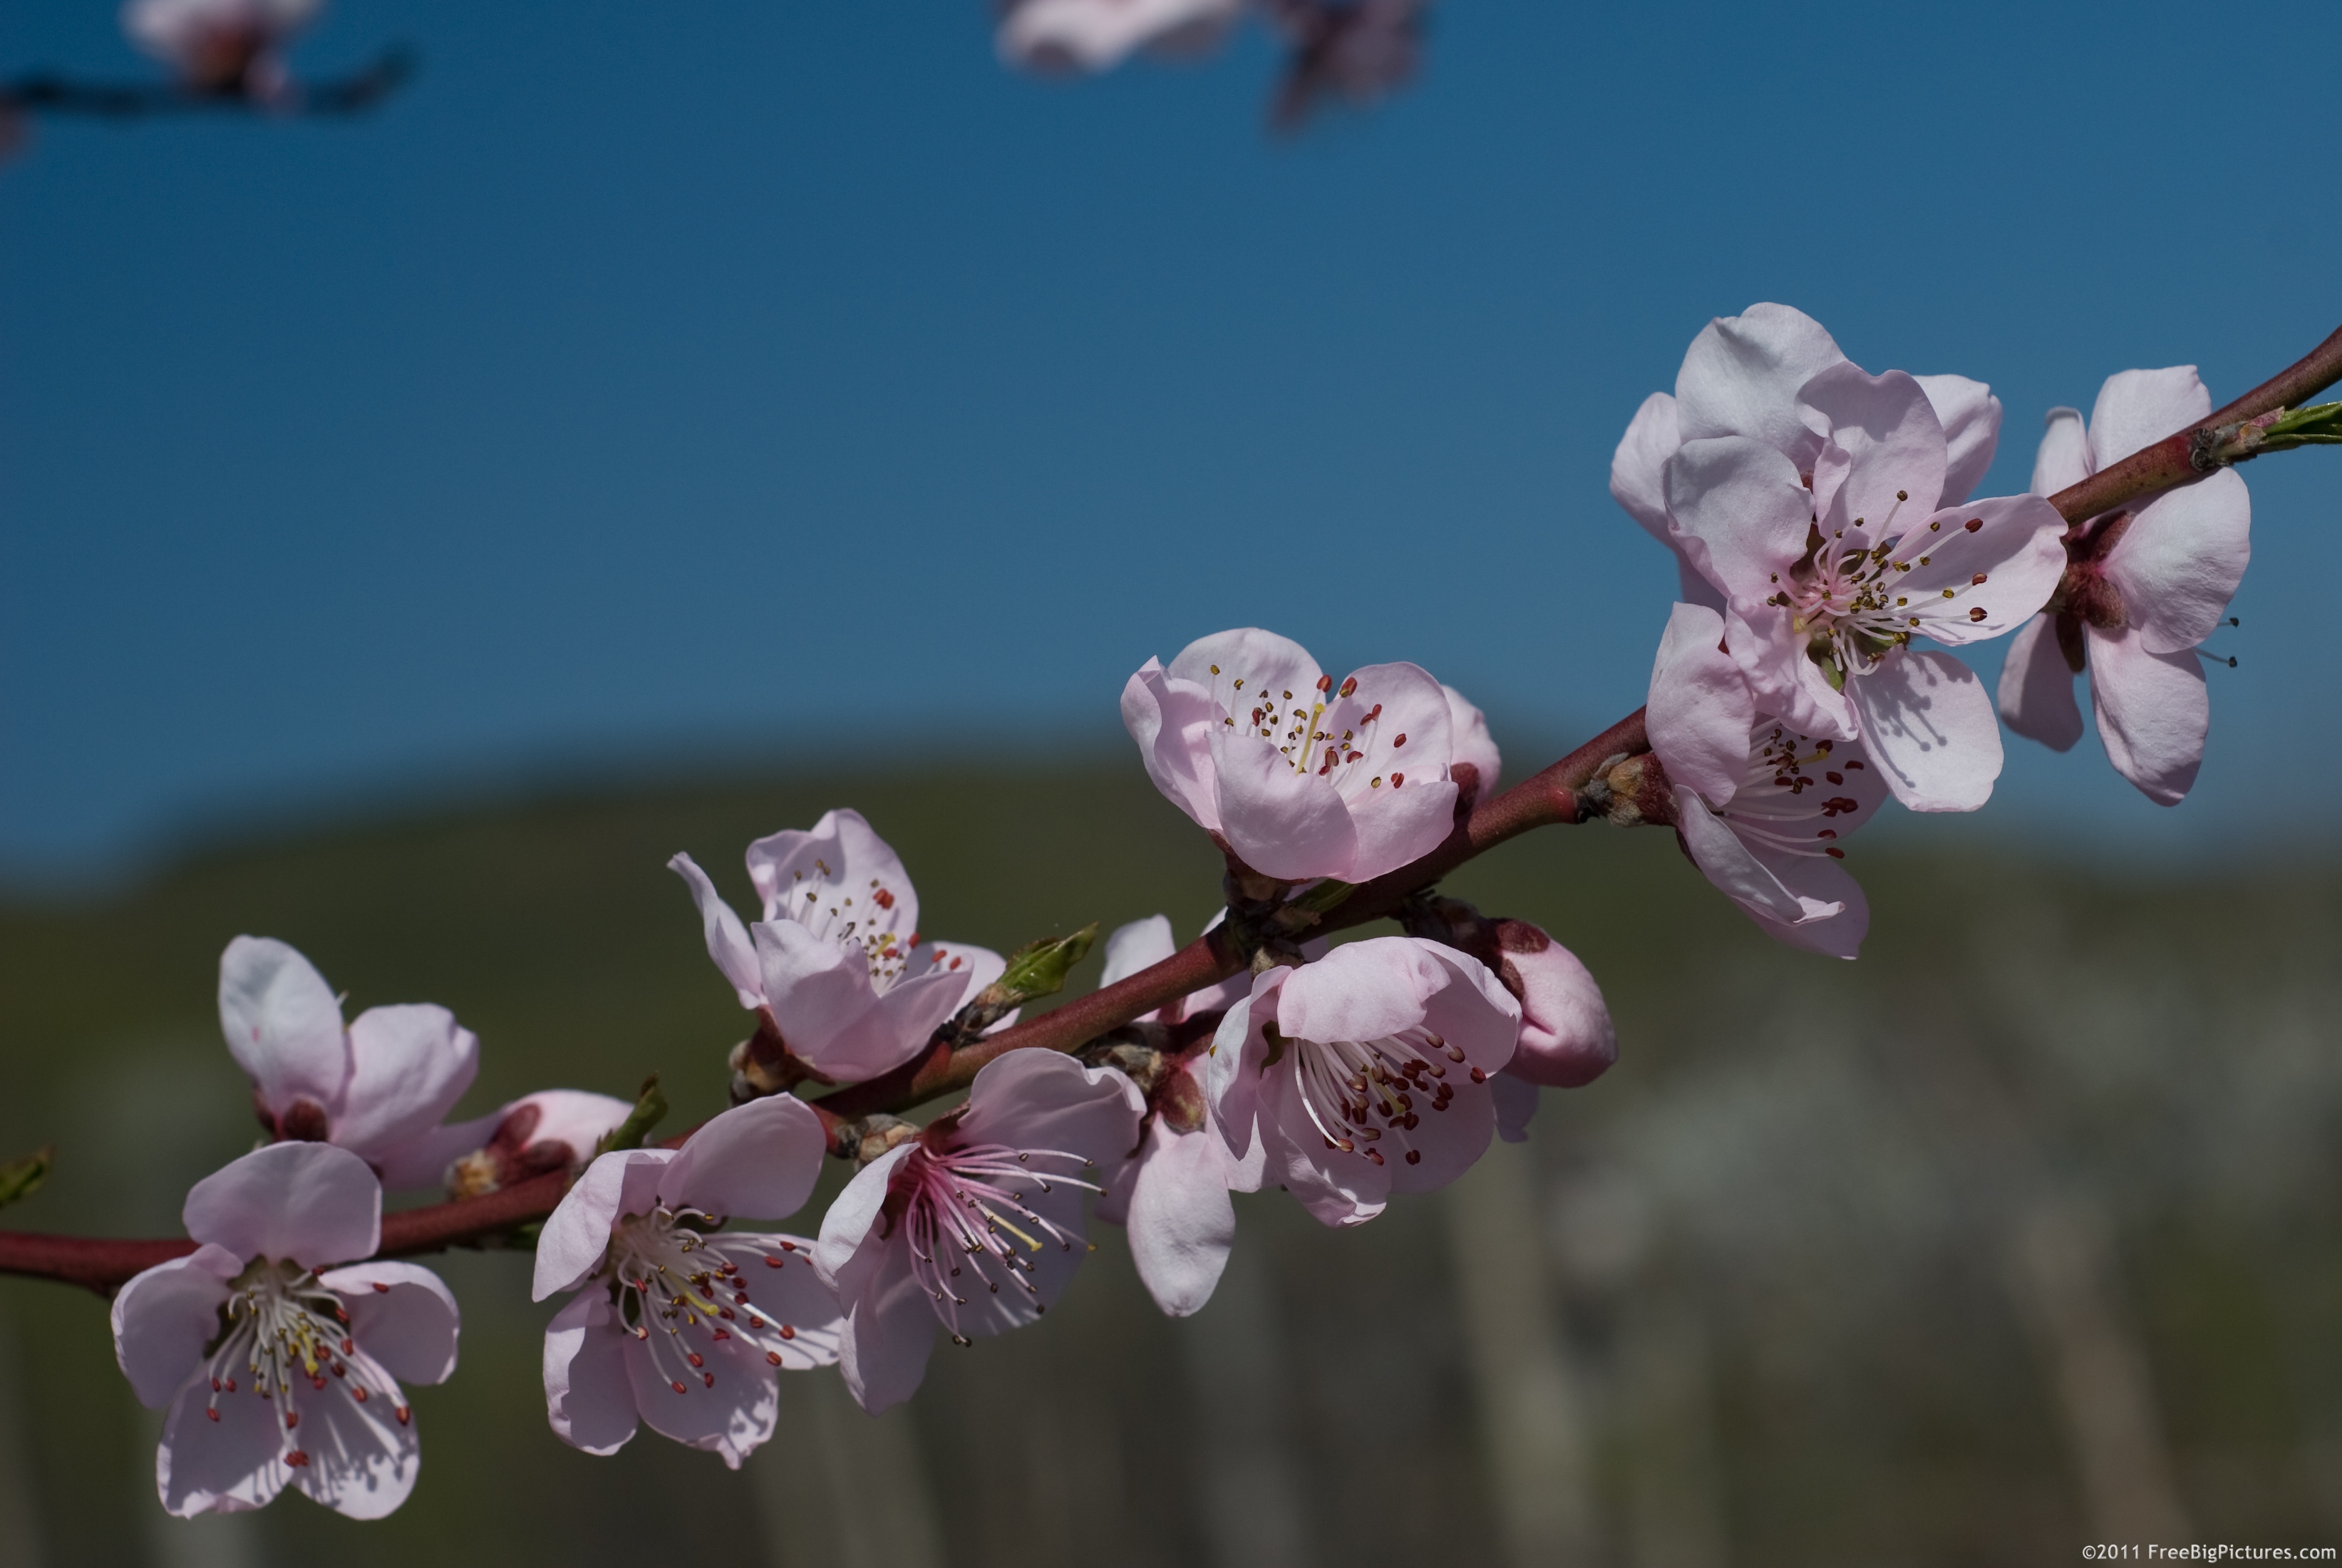 Peach blossoms - native of China